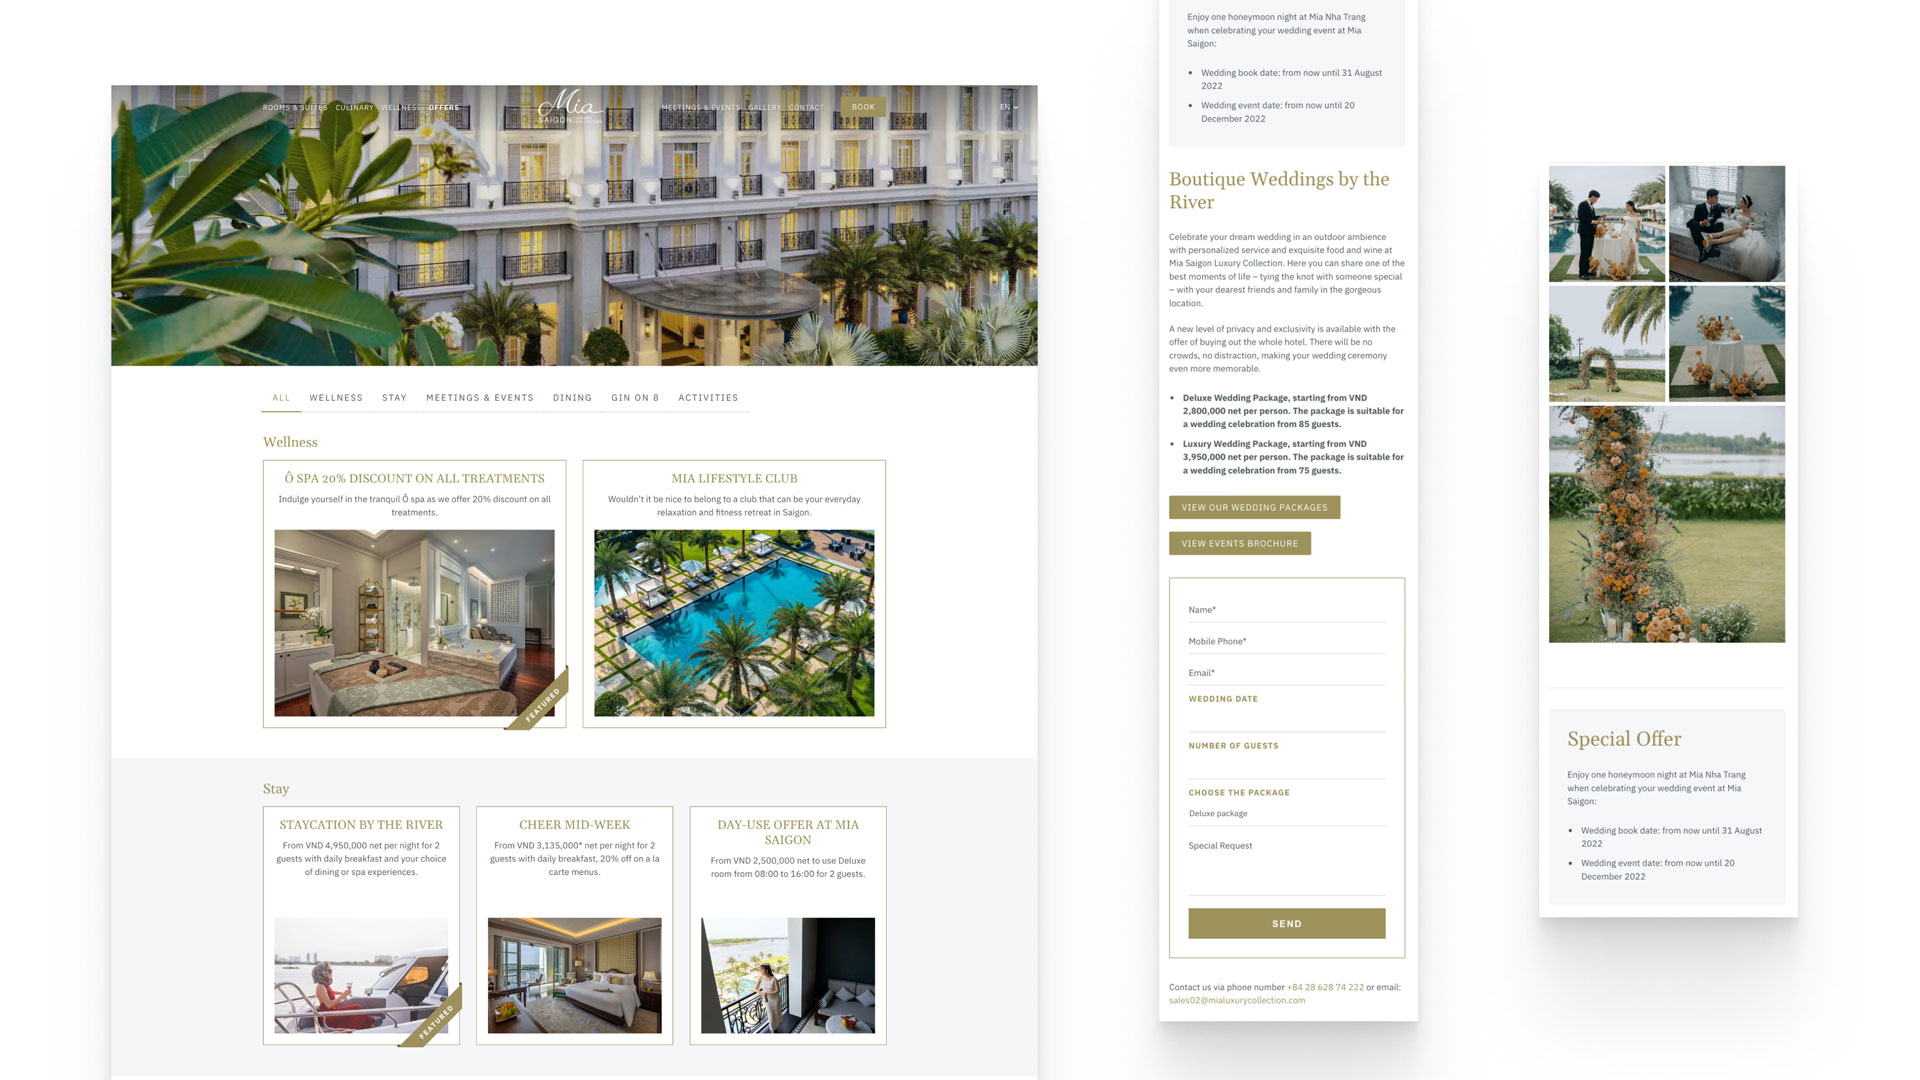 Mia Saigon hotel website design offers page